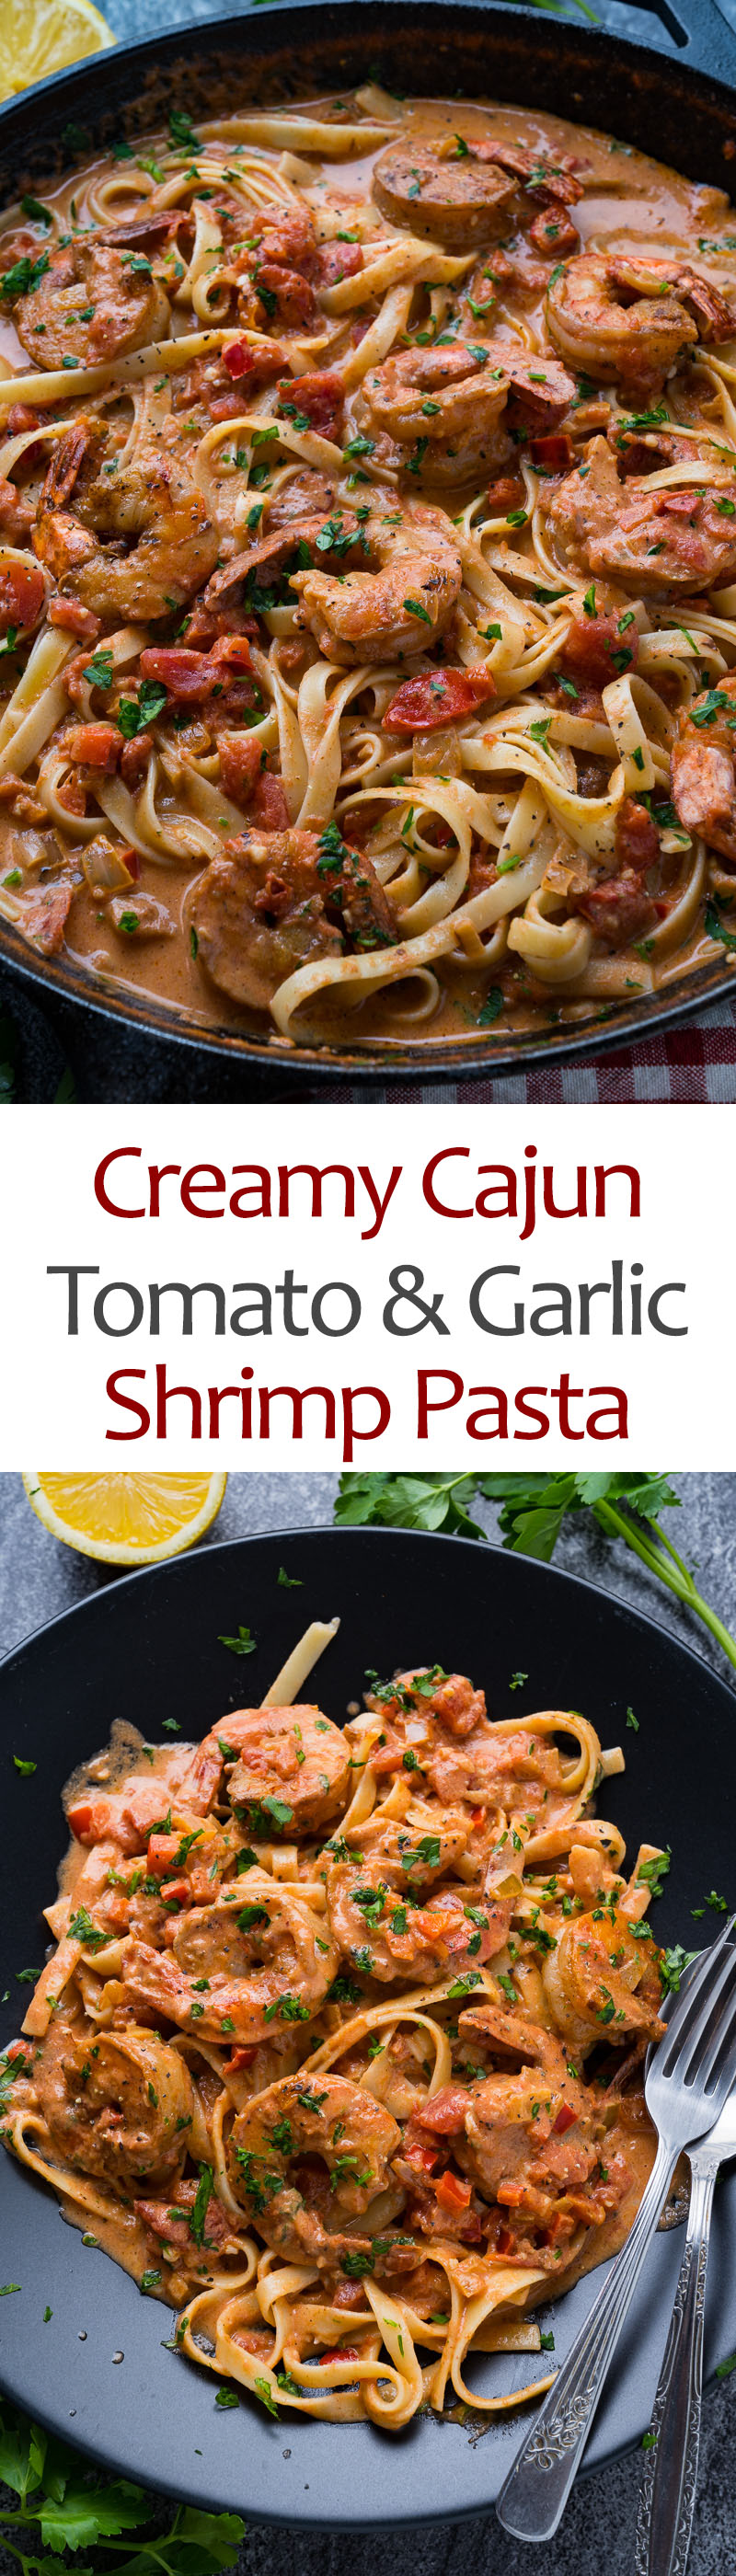 Creamy Cajun Tomato and Garlic Shrimp Pasta